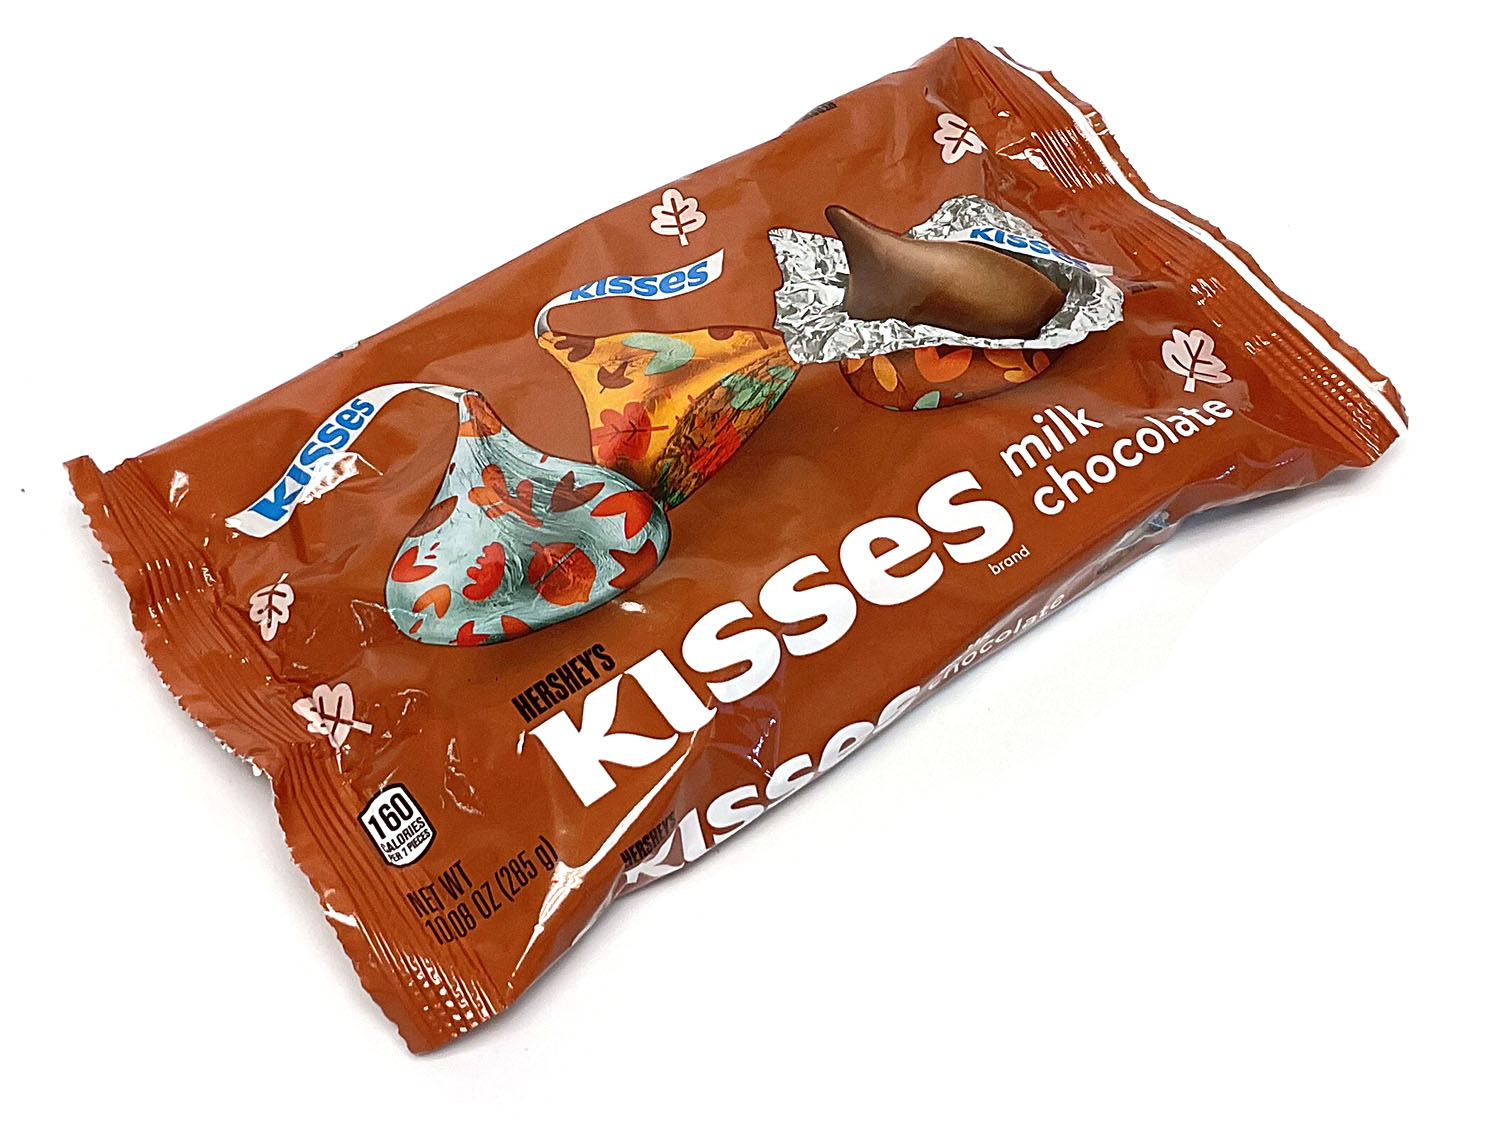 Hershey Kisses - Fall Harvest Foiled - 10.08 oz bag